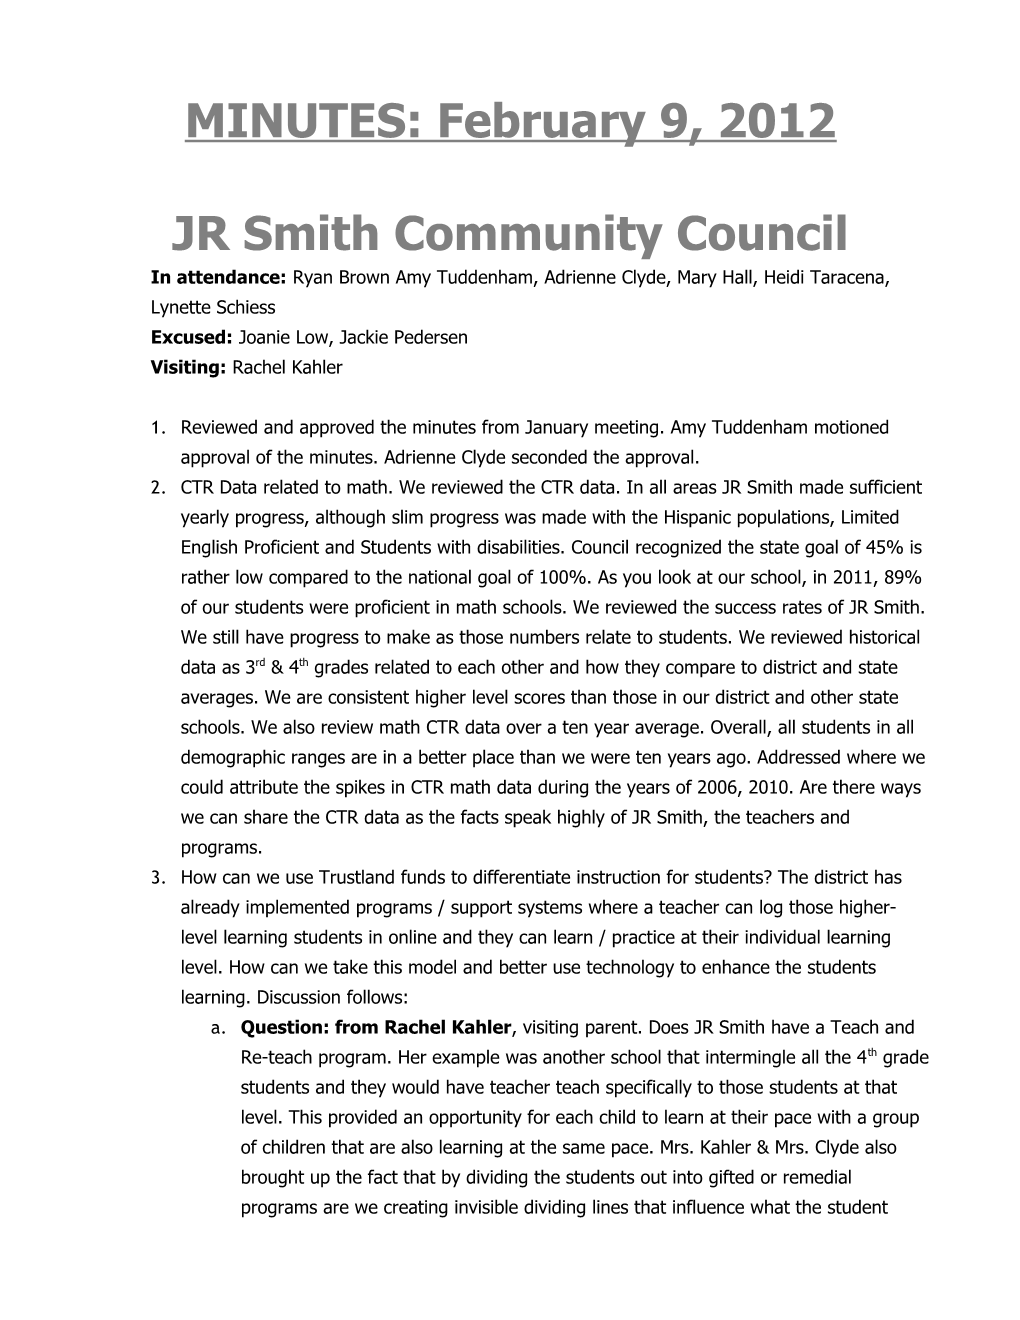 JR Smith Community Council